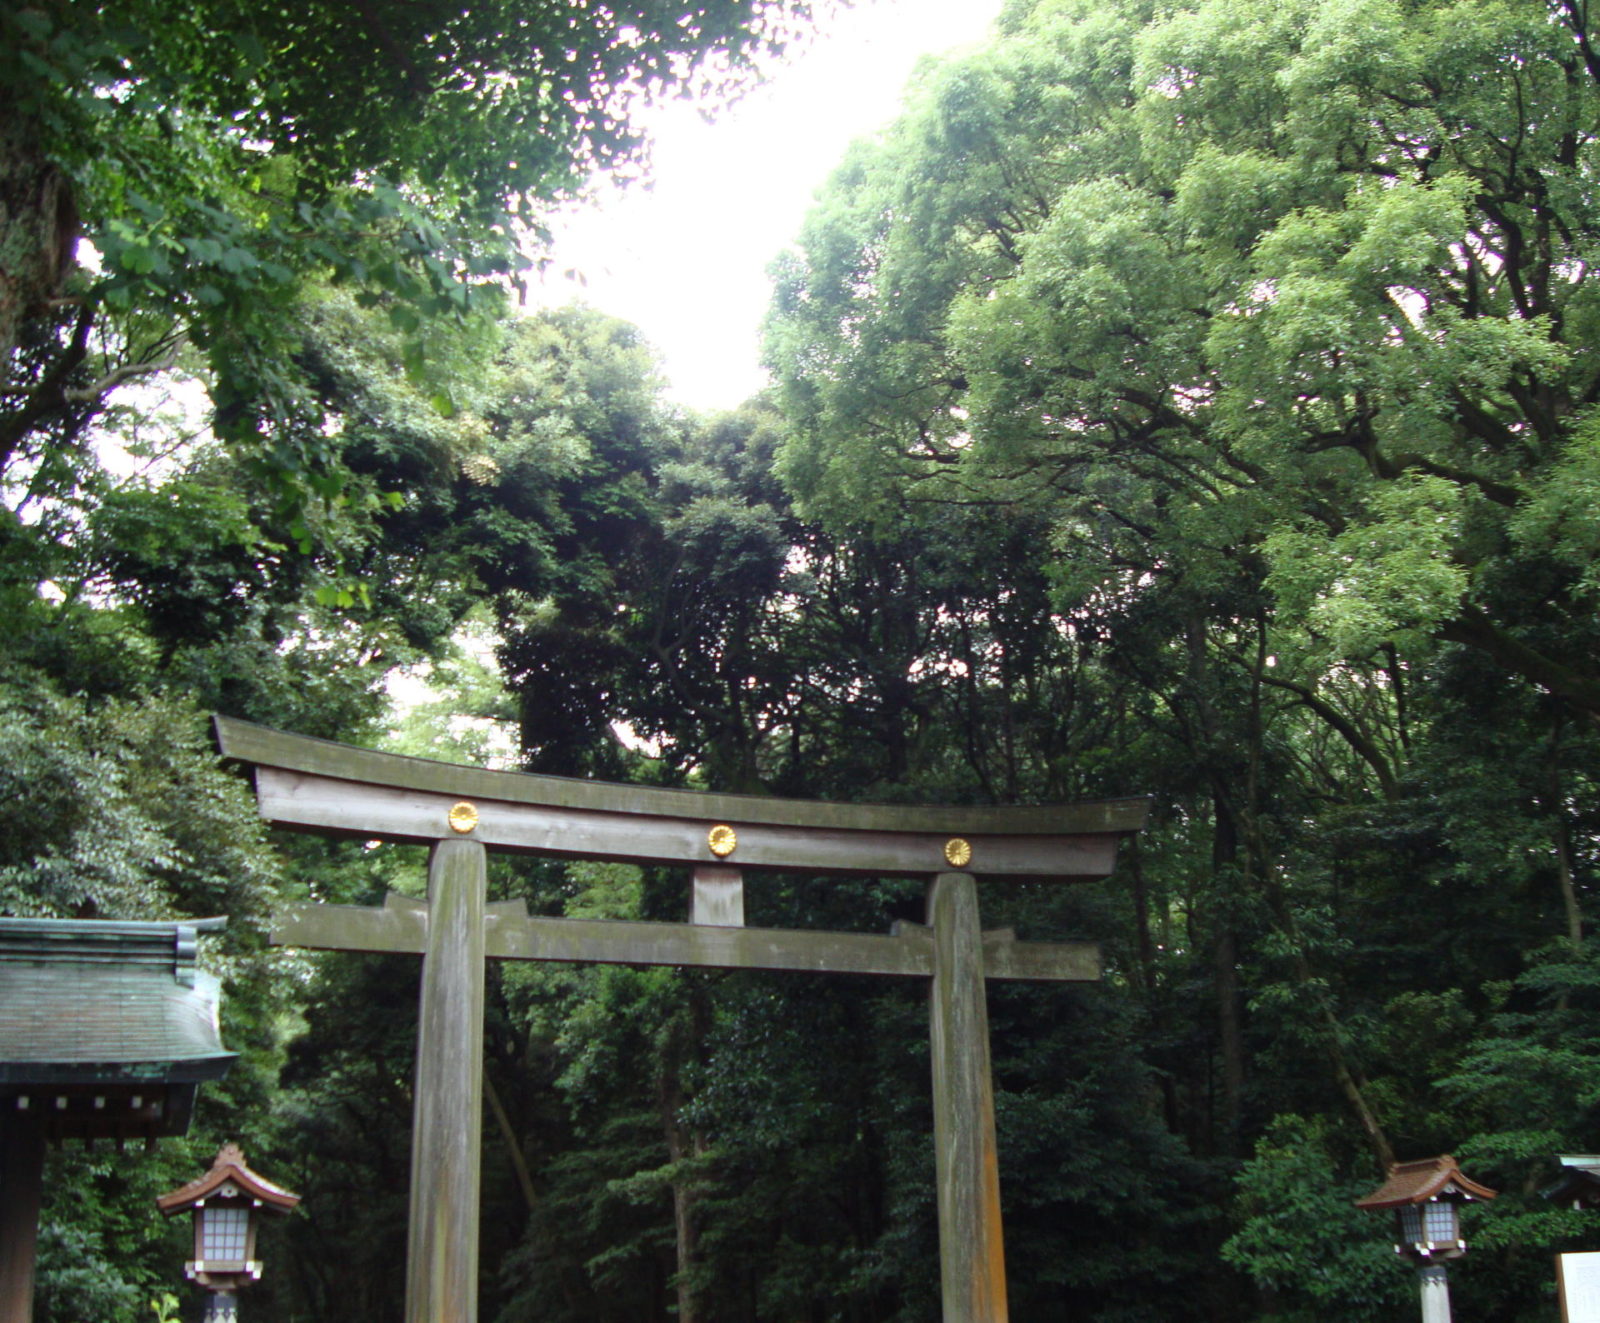 Giant wooden Torii gate at Meiji Jingu Shrine